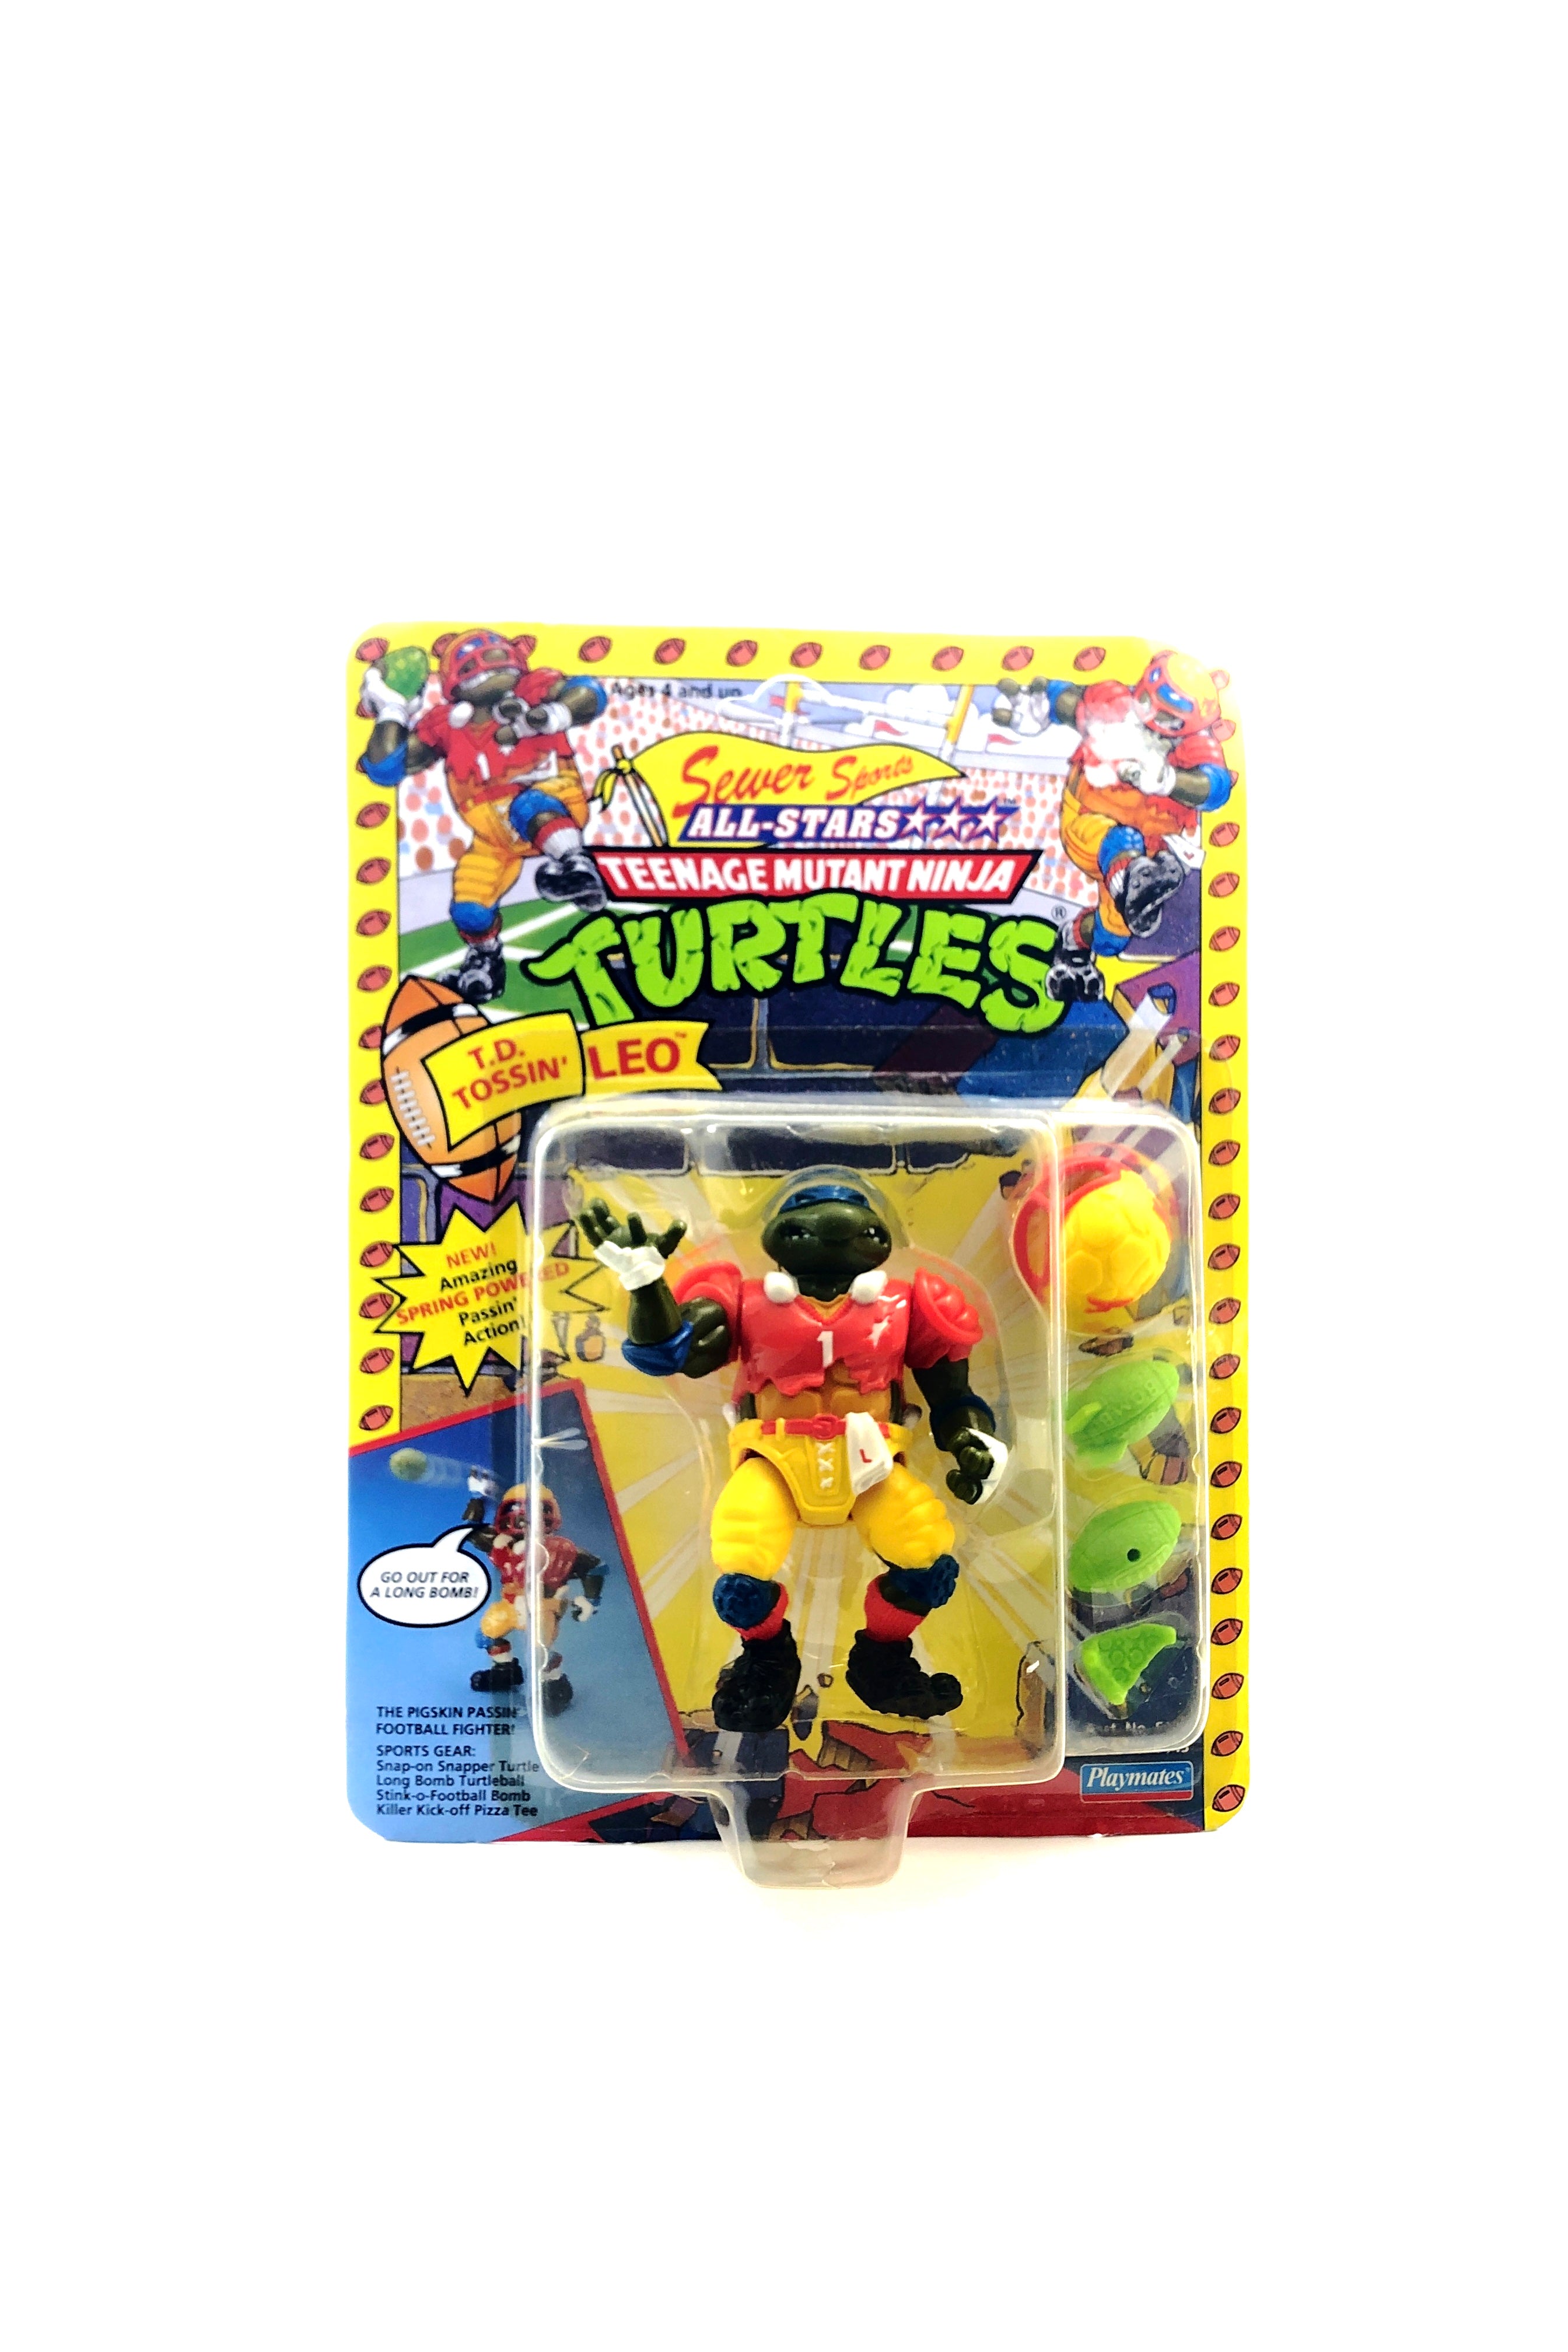 Teenage Mutant Ninja Turtles Sewer Sports All-Stars T.D. Tossin' Leo (Playmates, 1991)